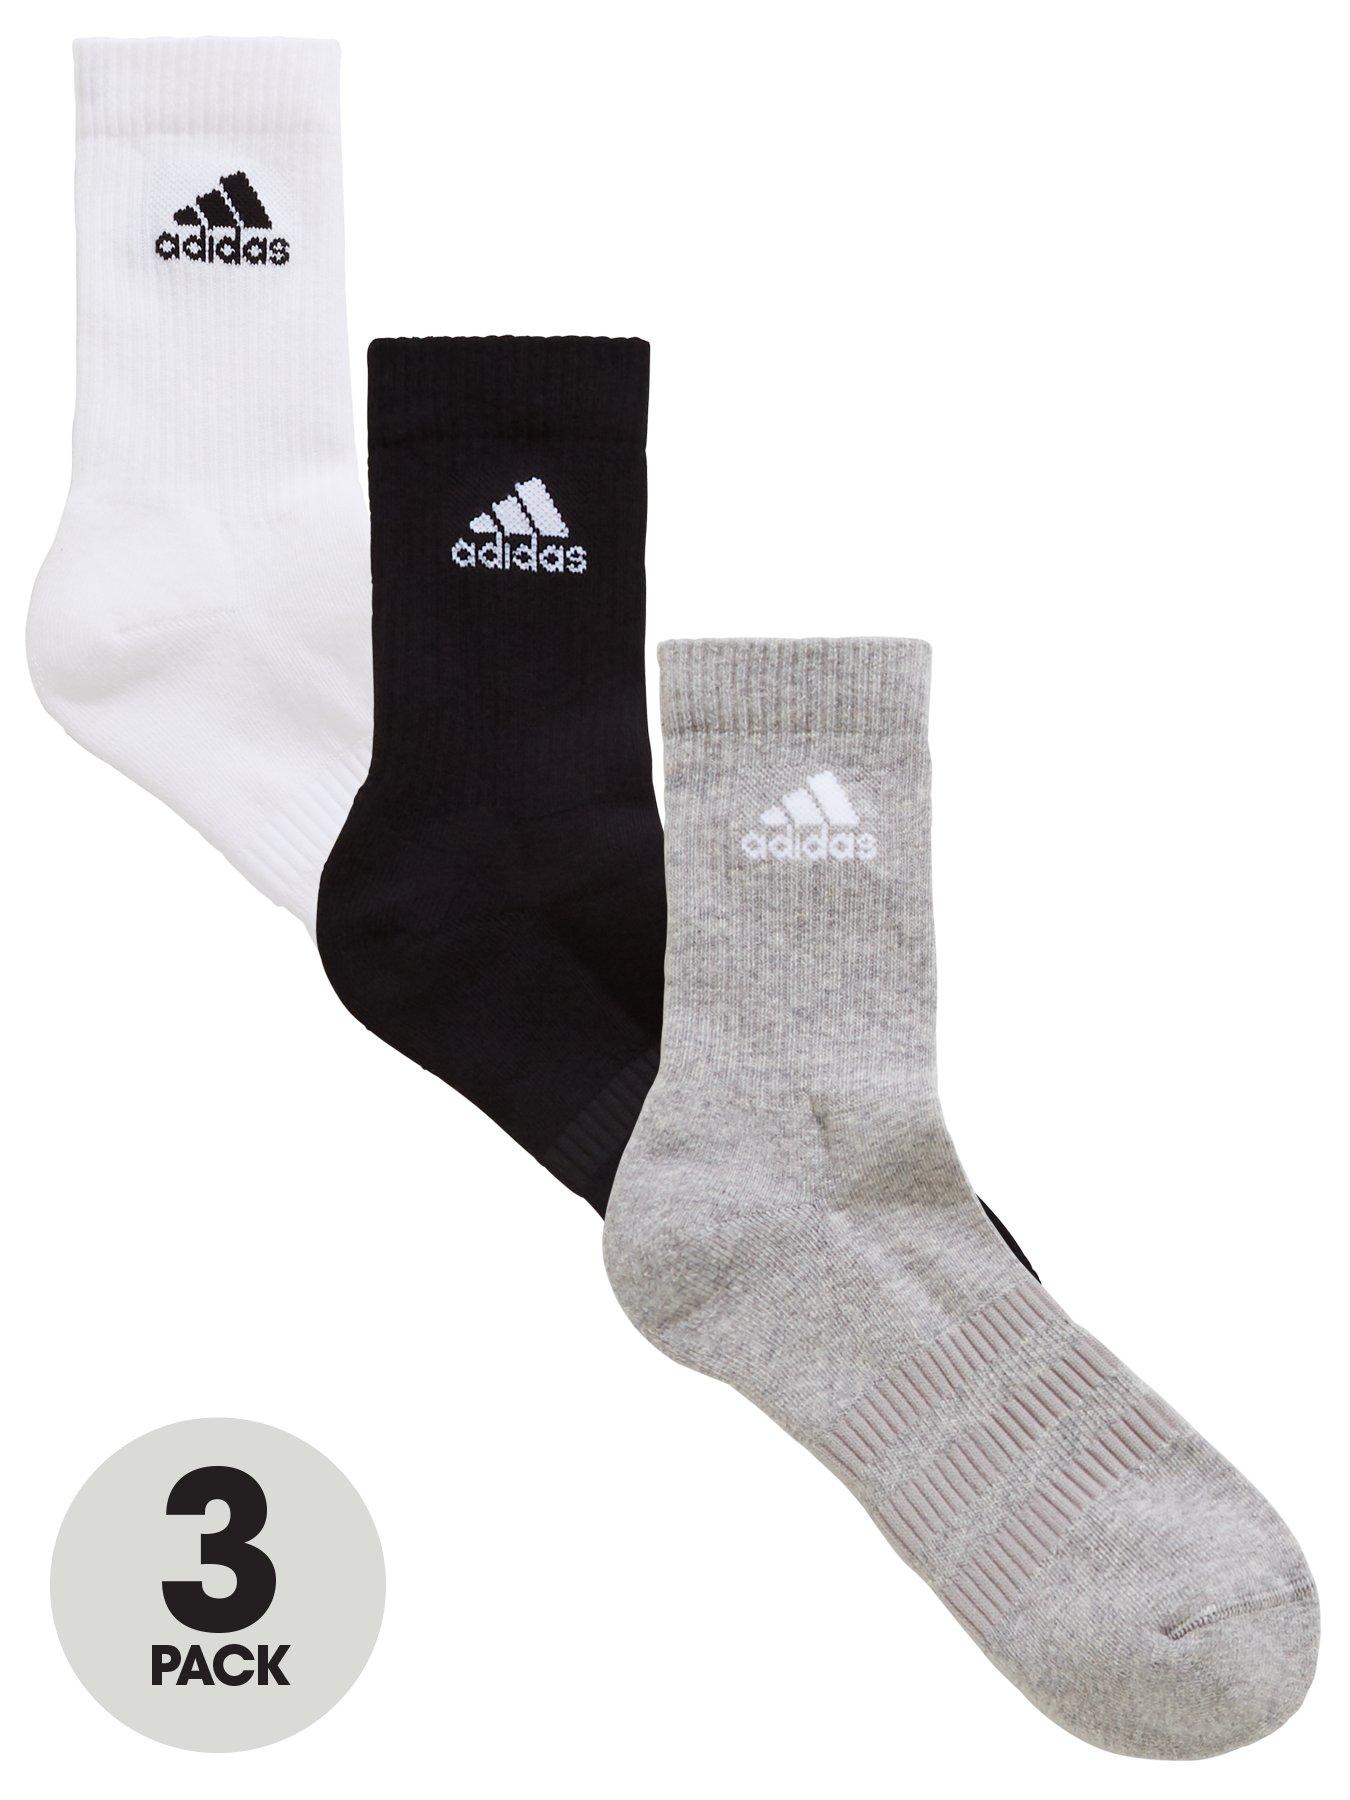 adidas 3 pack crew socks